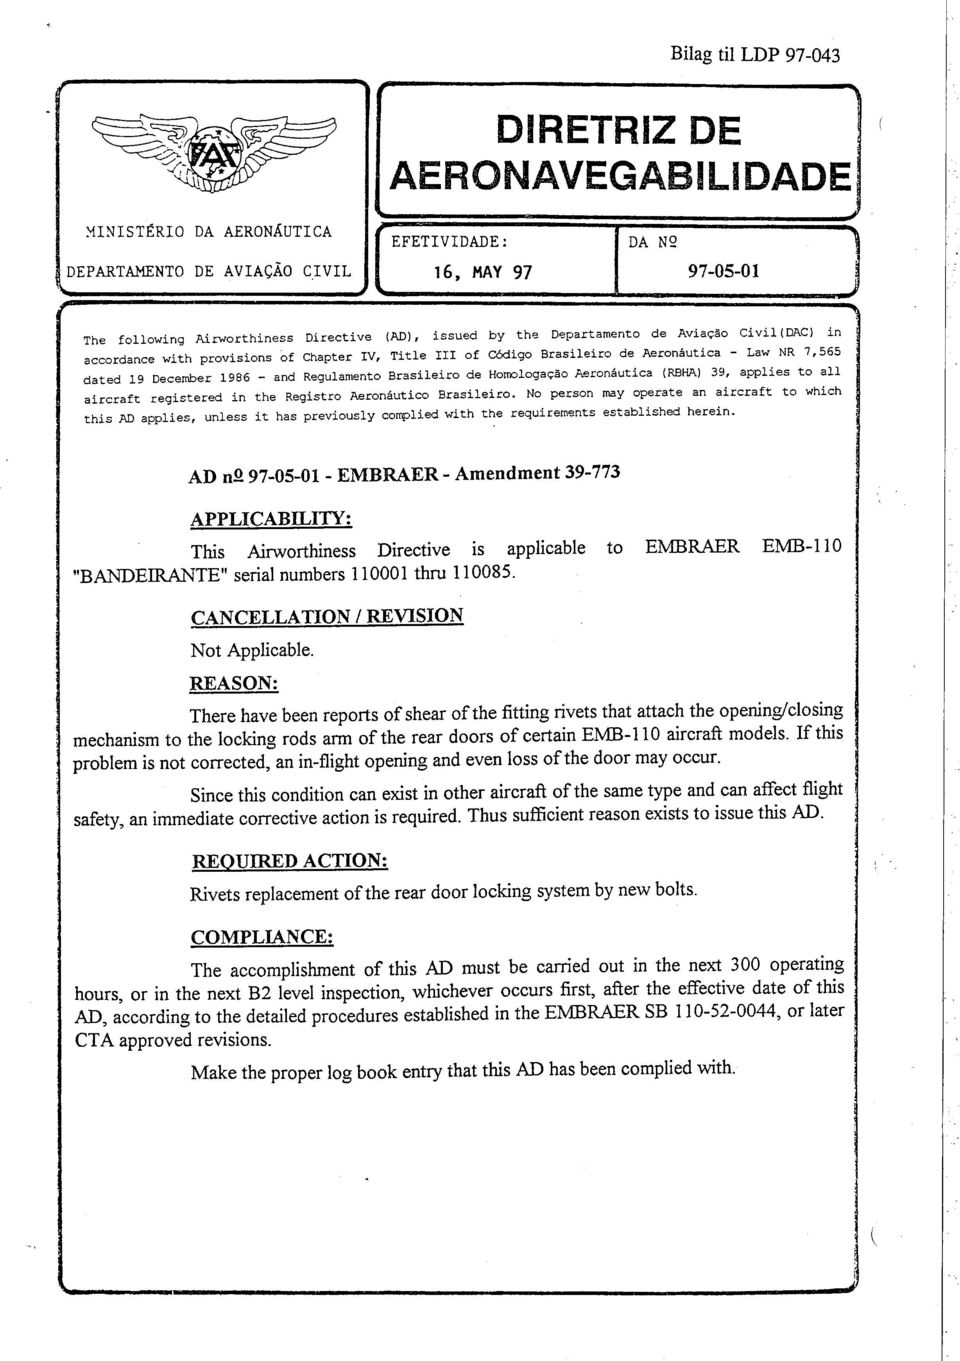 AD) r issued by the Departamento de Aviaçào Civil DAC) in accordance with provisions of Chapter iv, Tit1e ILL of Cóigo Brasileiro de Aeronáutica - Law NR 7,565 dated 19 December 1986 - and